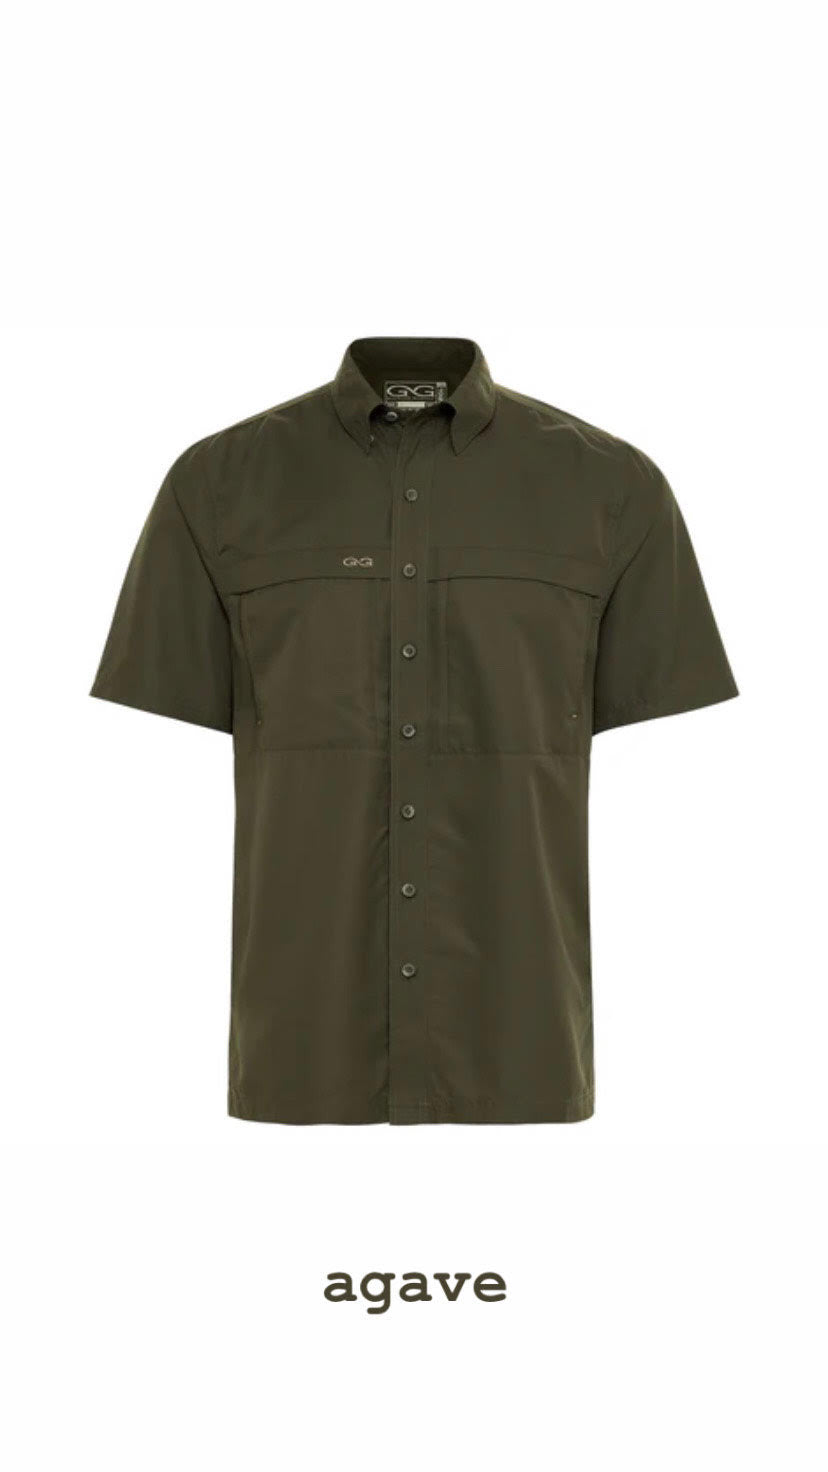 Game Guard Microfiber Short Sleeve Shirt (Pick Size First) Medium / Maroon